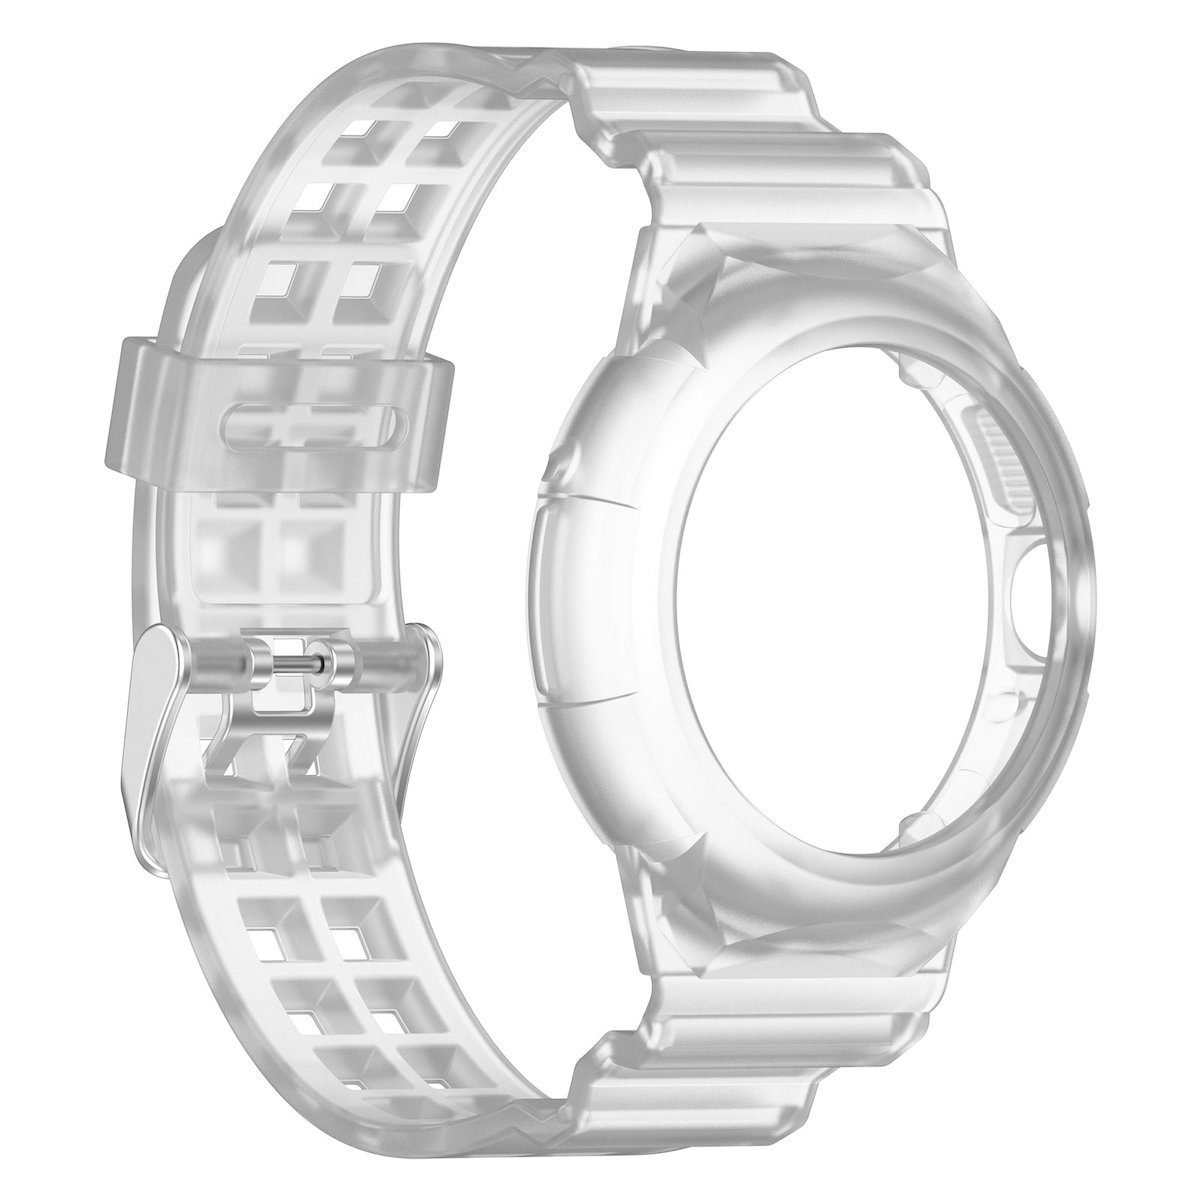 Wigento Smartwatch-Armband Gehäuse Silikon 1 2 Für Transparent Google Armband + Pixel mit Watch